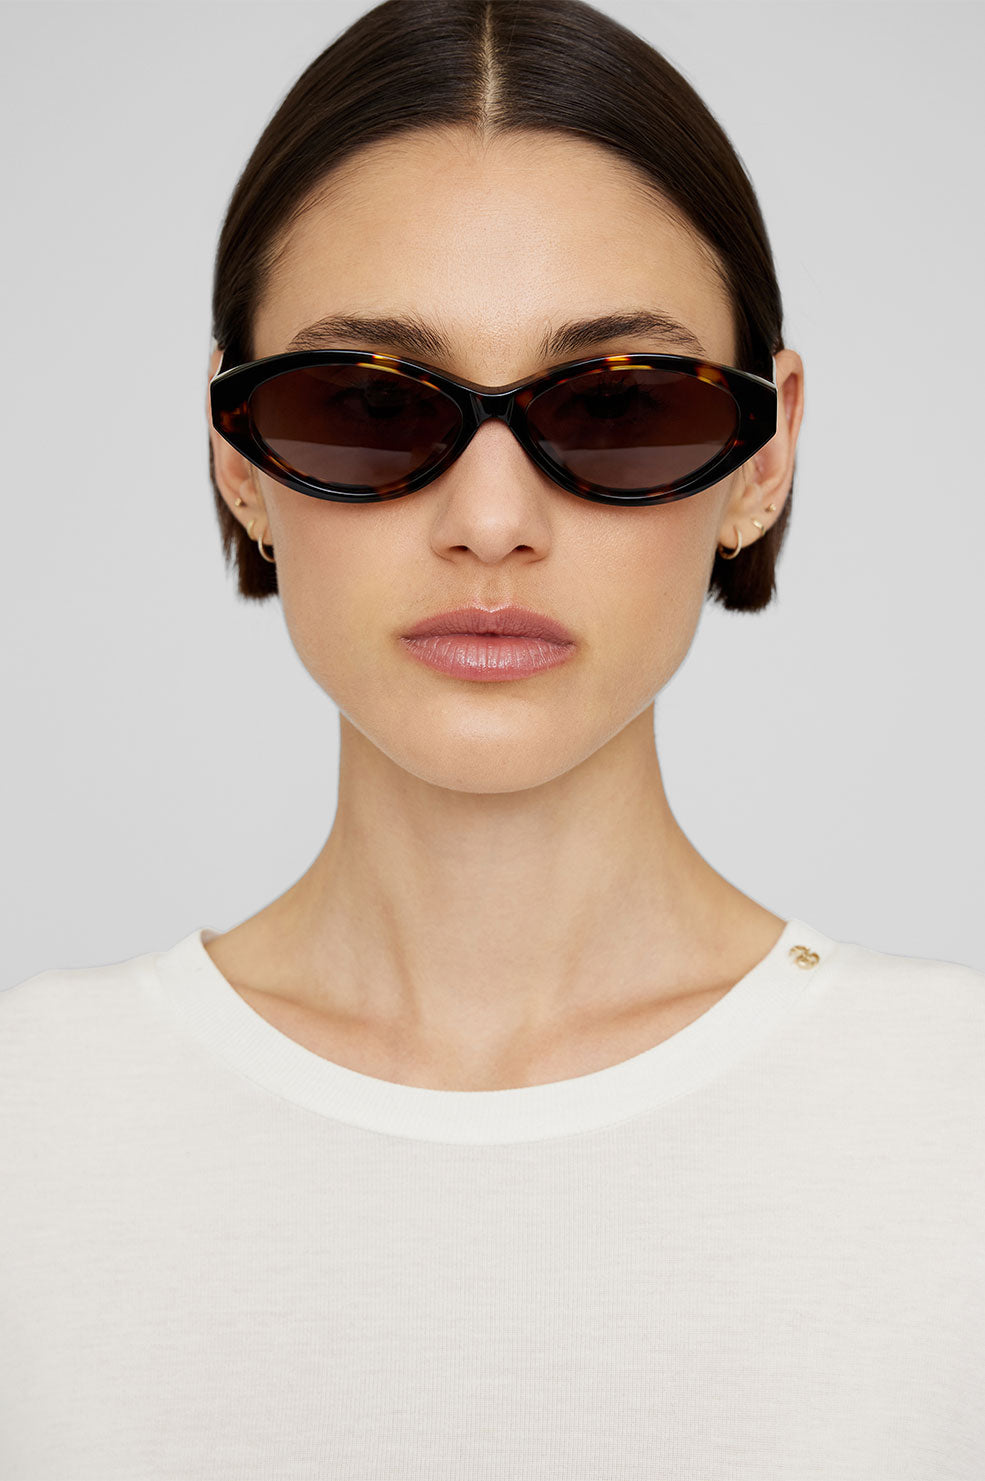 ANINE BING Paris Sunglasses - Dark Tortoise - On Model Front